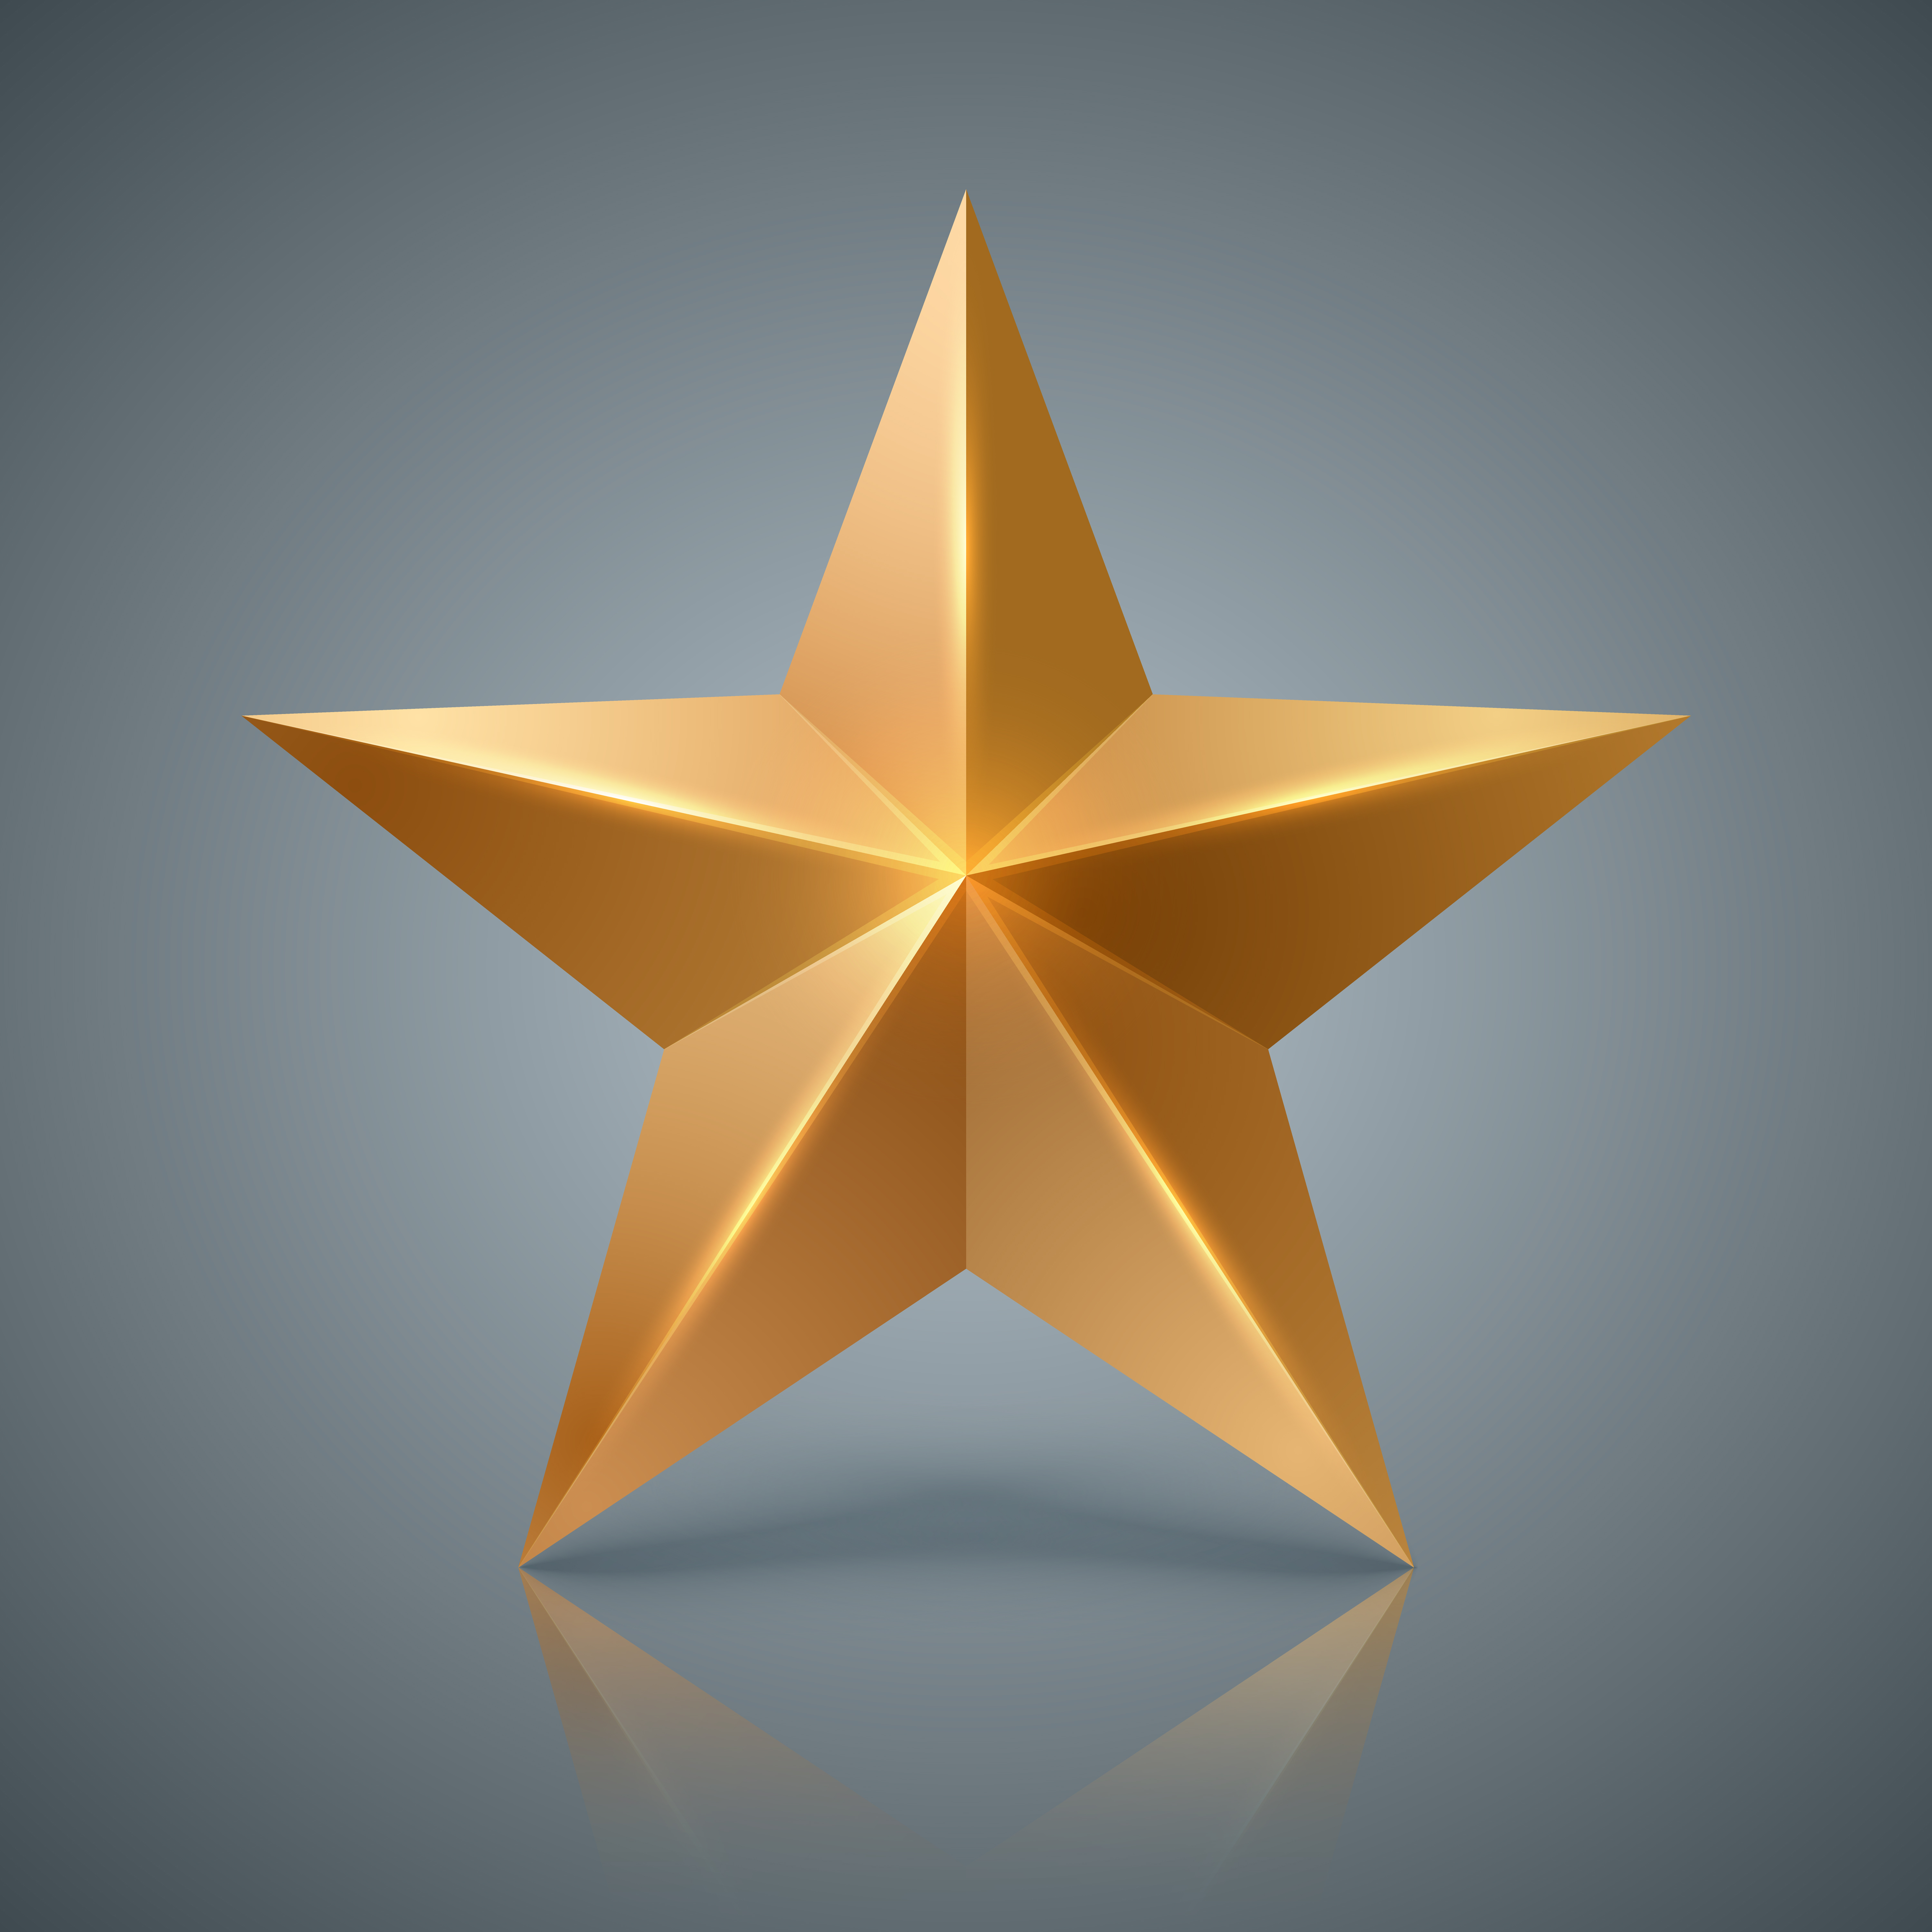 Download Gold star. 3D realistic icon 456675 - Download Free Vectors, Clipart Graphics & Vector Art